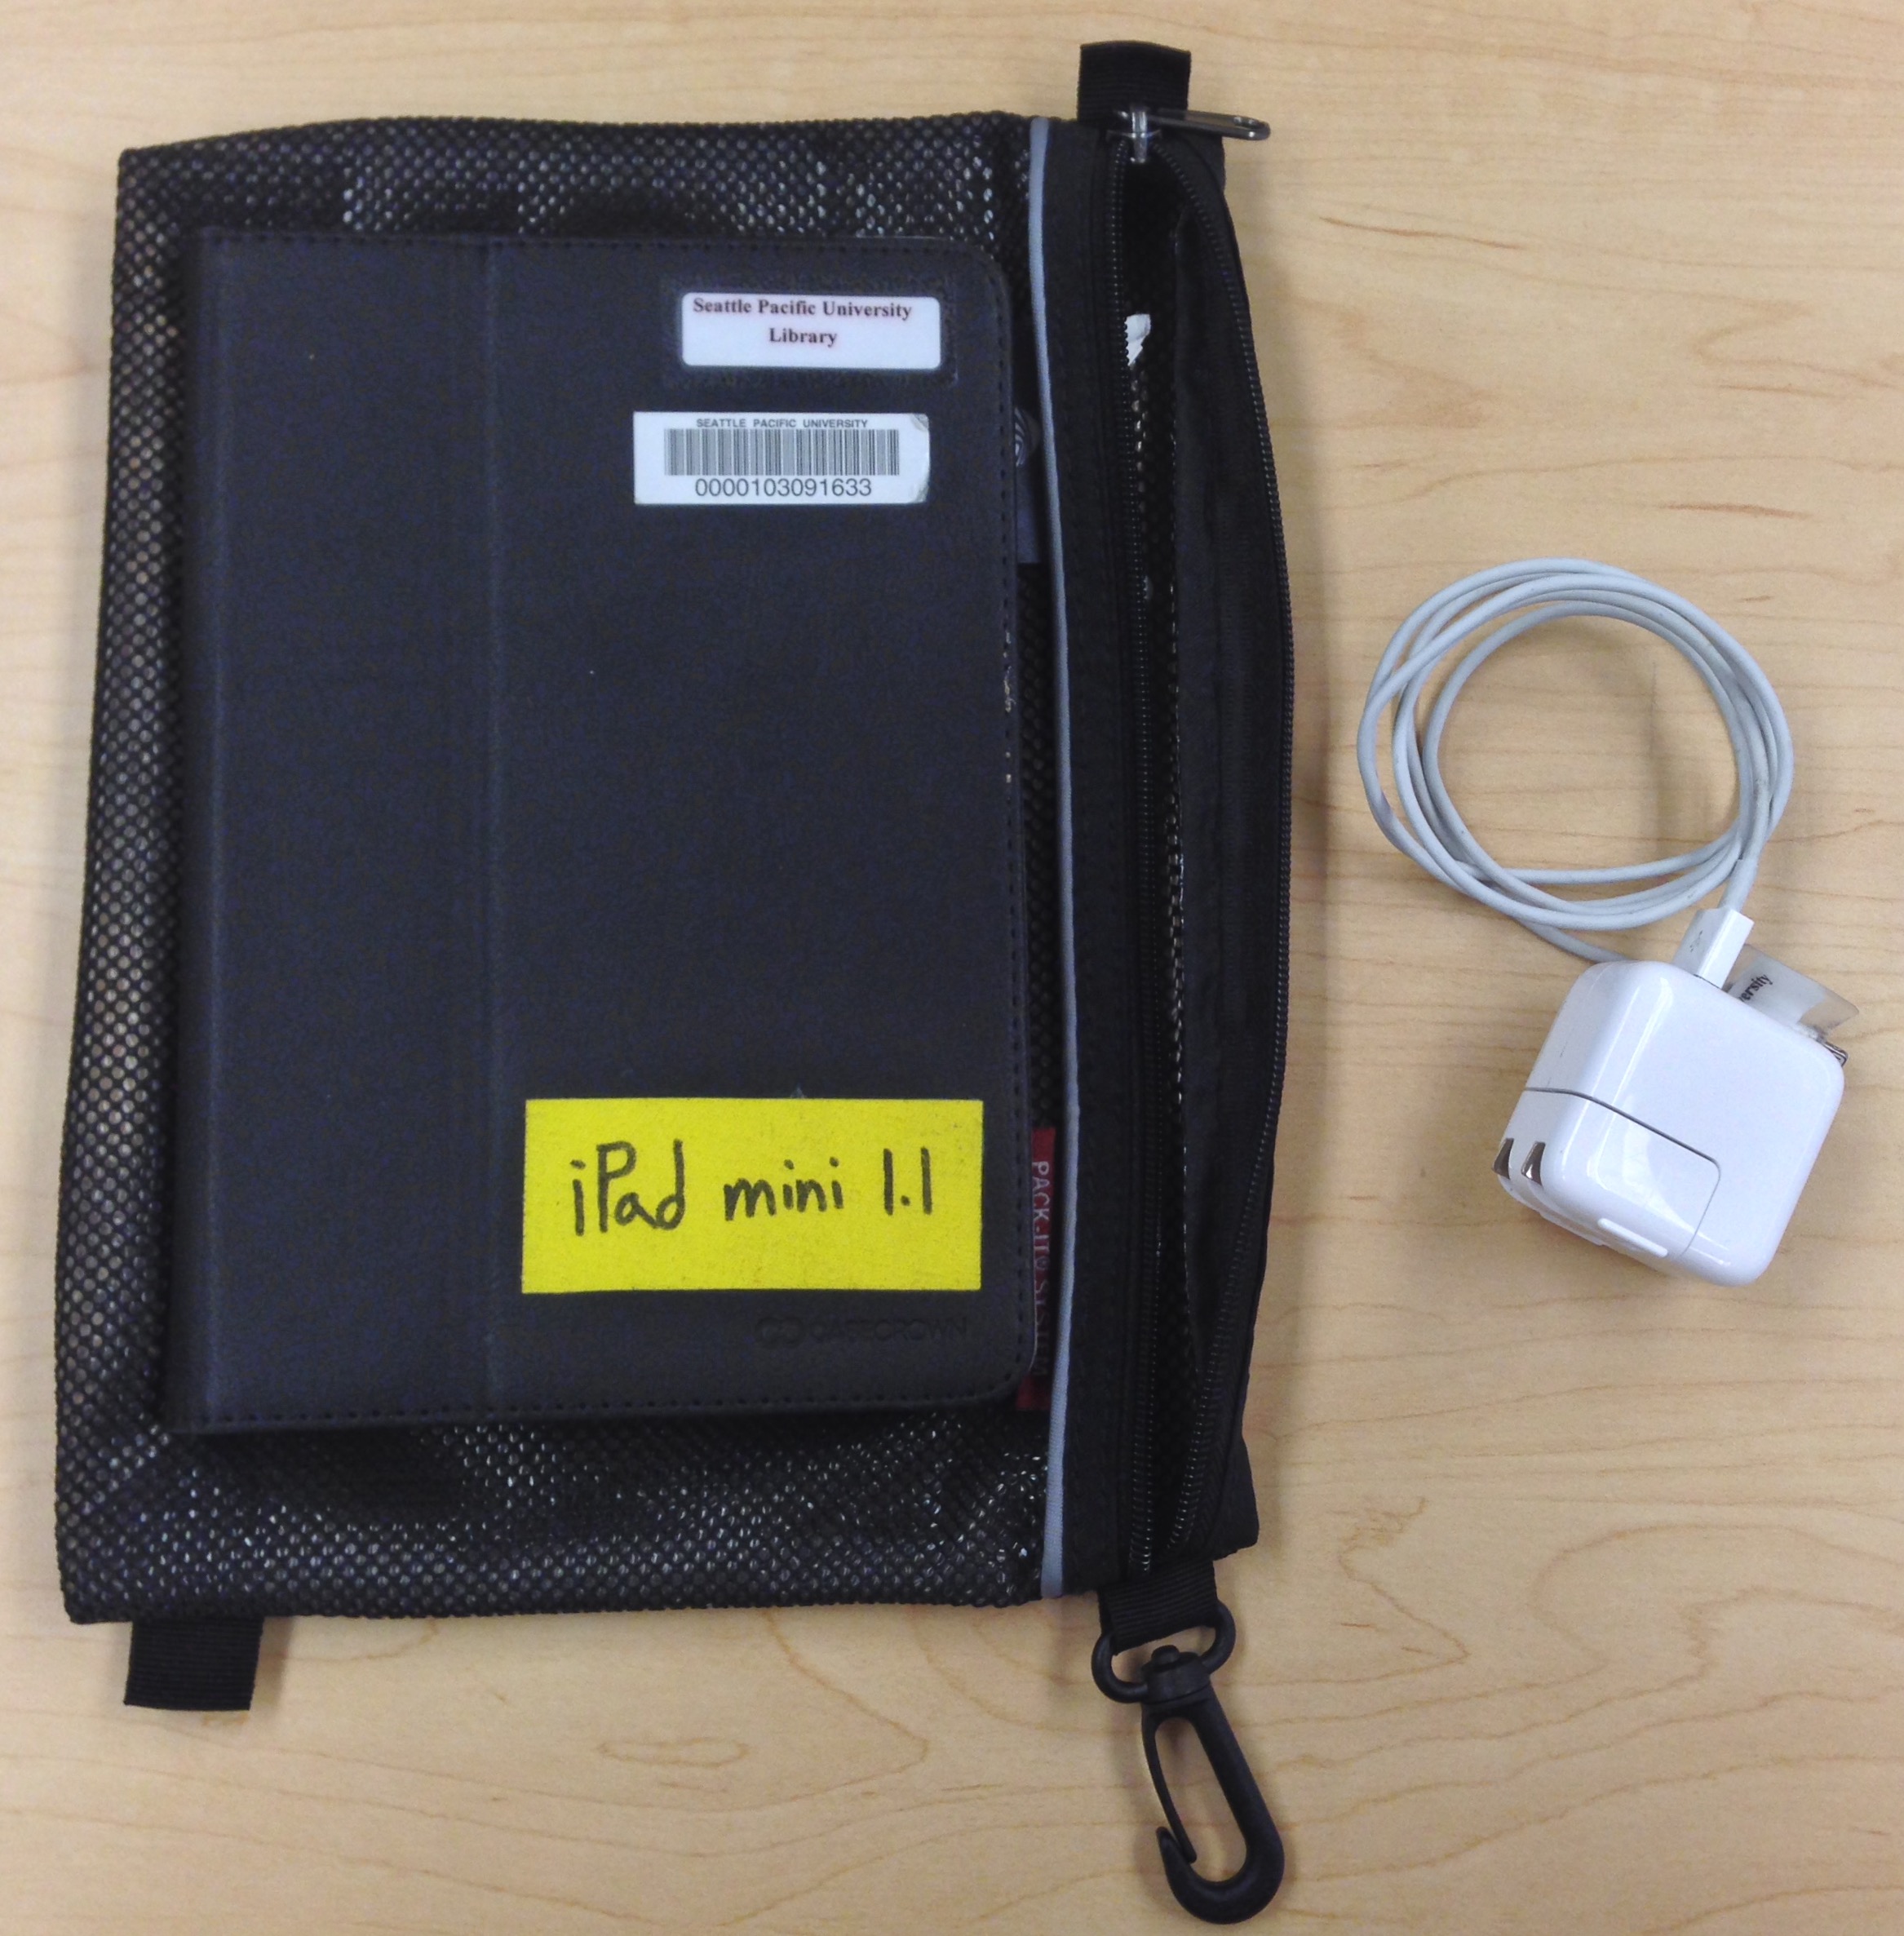 iPad Mini, iPad case, bag, USB sync cable, and USB power adapter